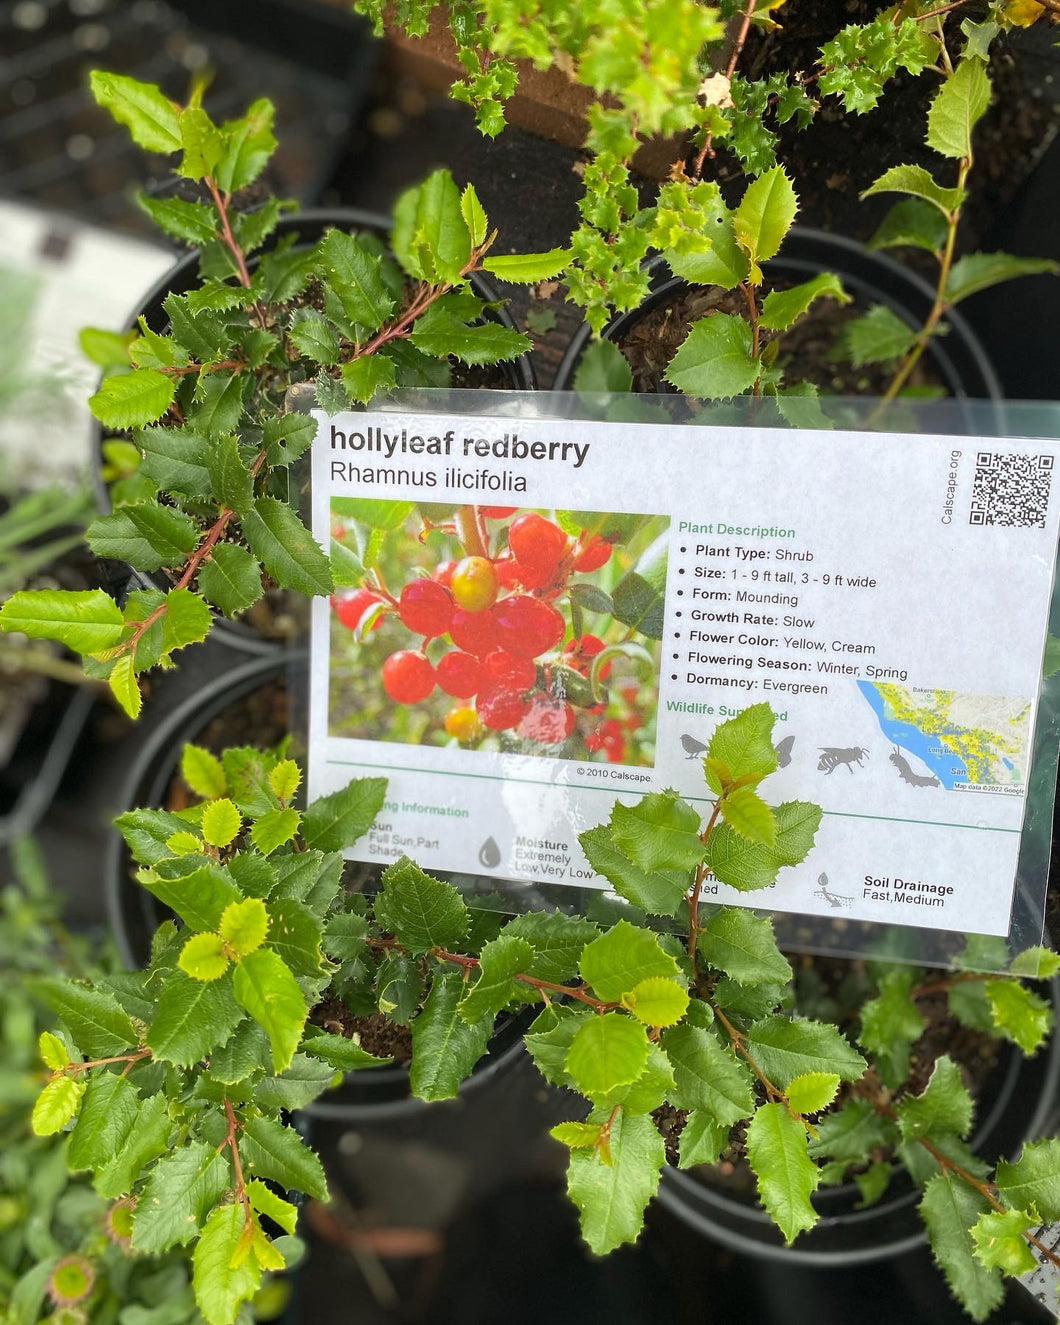 Rhamnus ilicifolia Hollyleaf Redberry